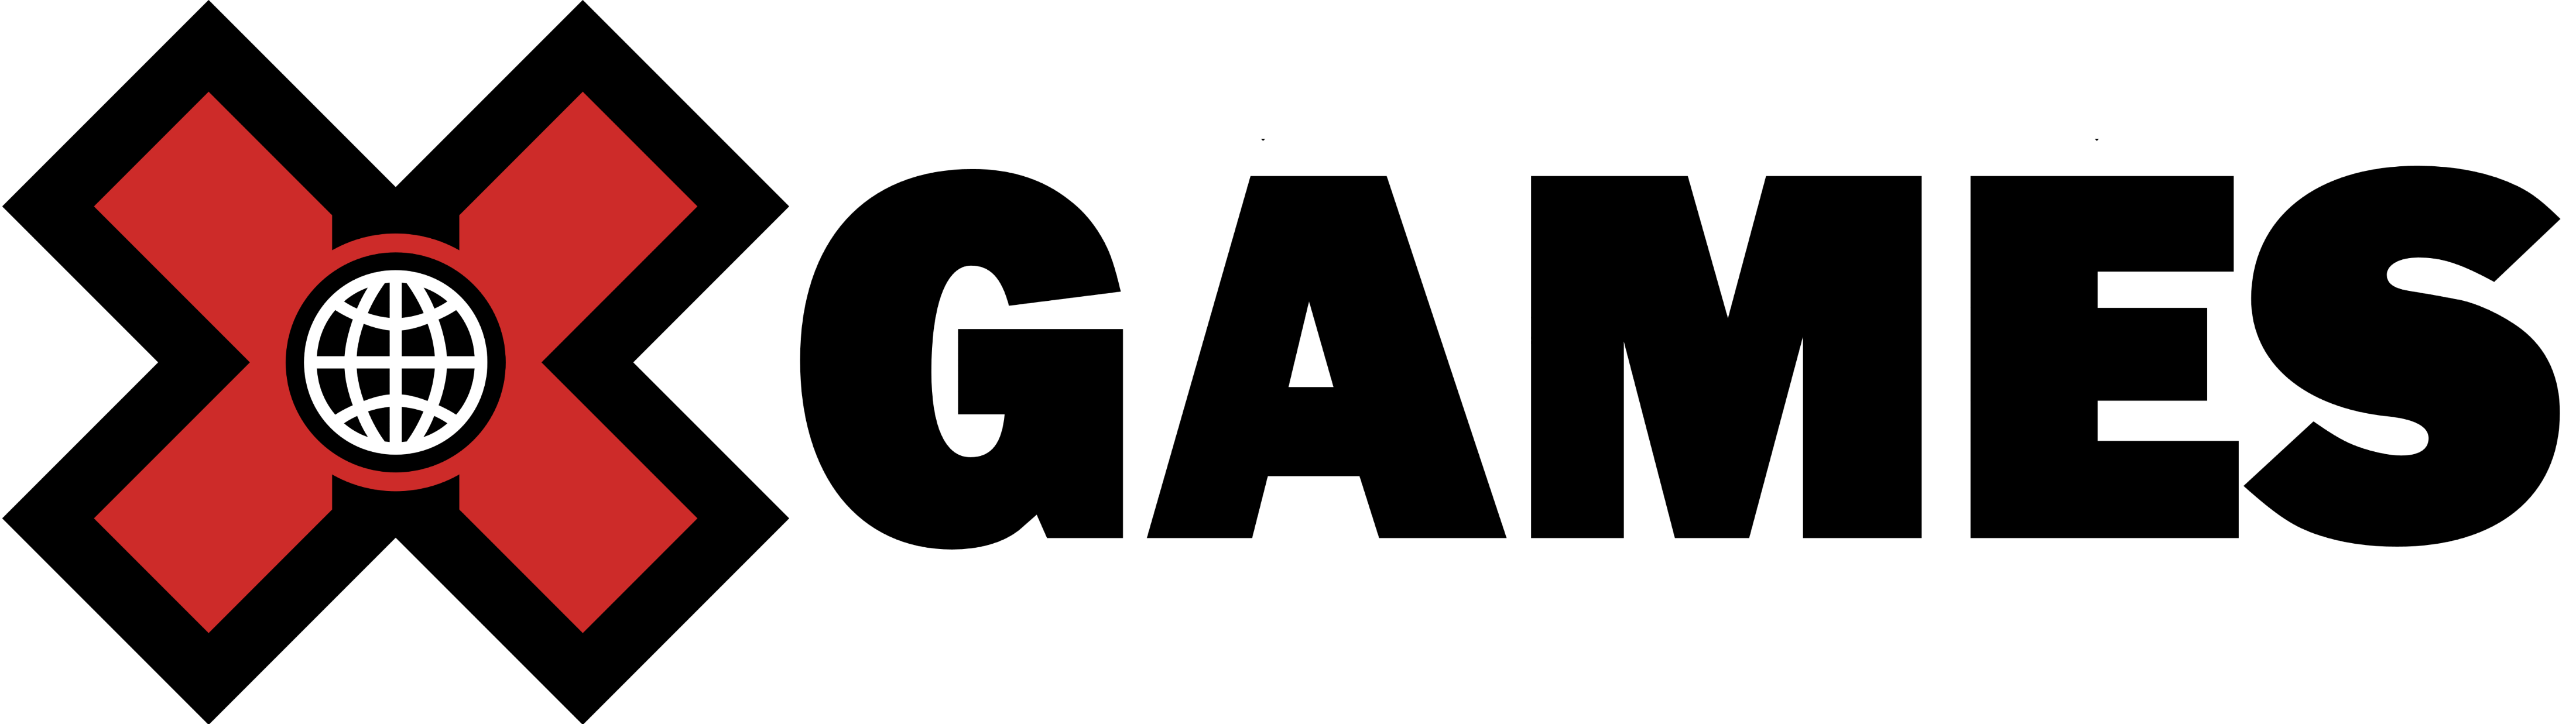 X Games Logo - X Games